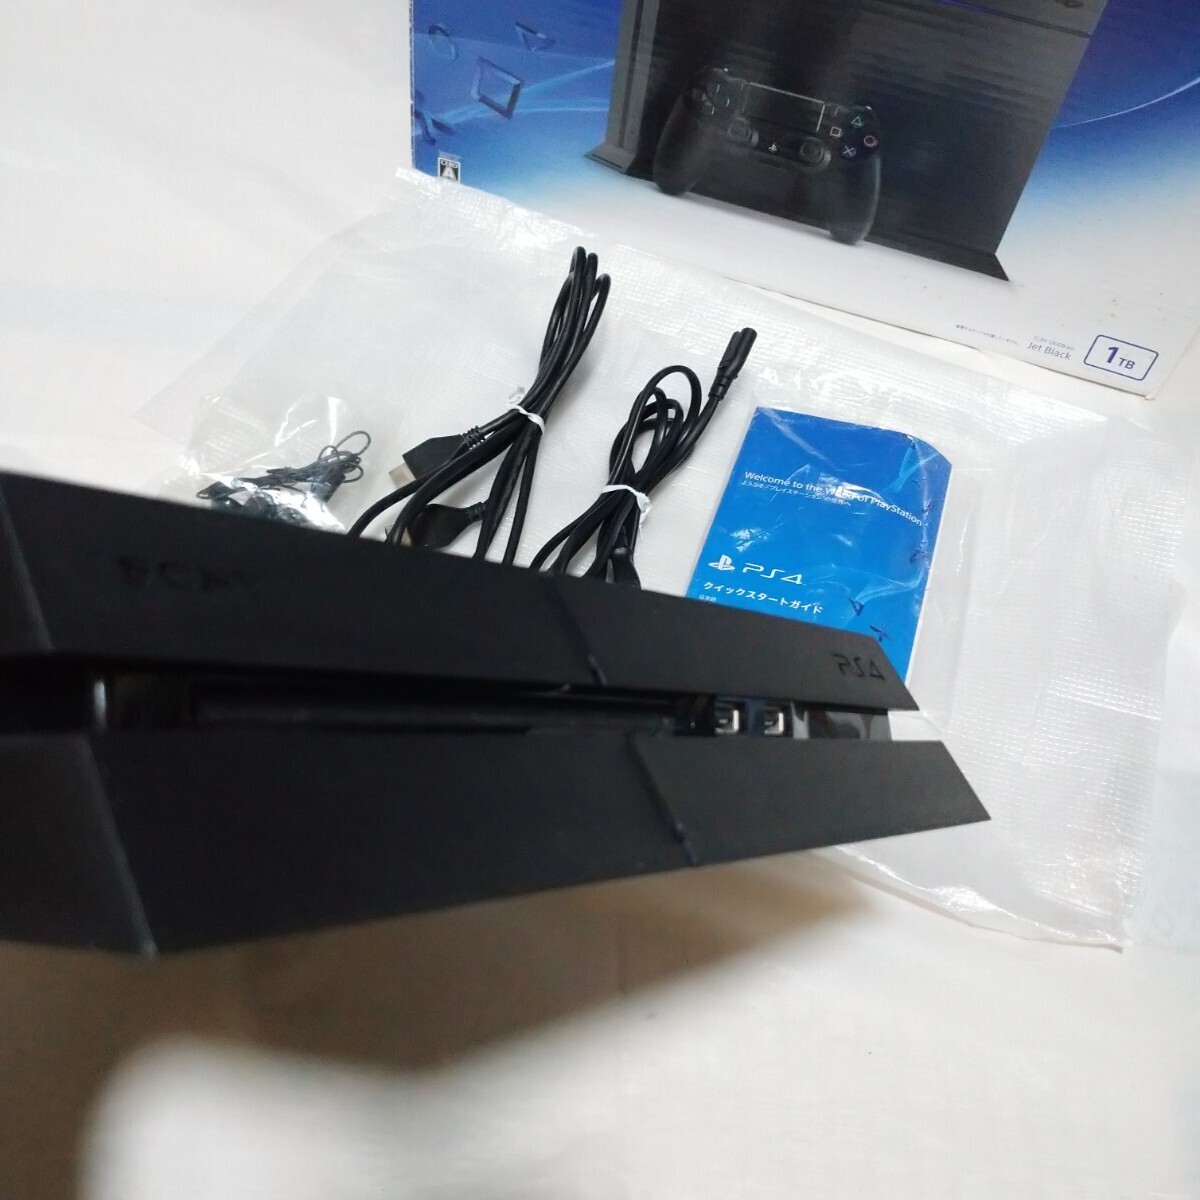 PlayStation4 1TB ジェット・ブラック CUH-1200B 本体 封印シールあり ゲームプレイ確認済み (ps4 プレステ4 SONY プレイステーション4)_画像5